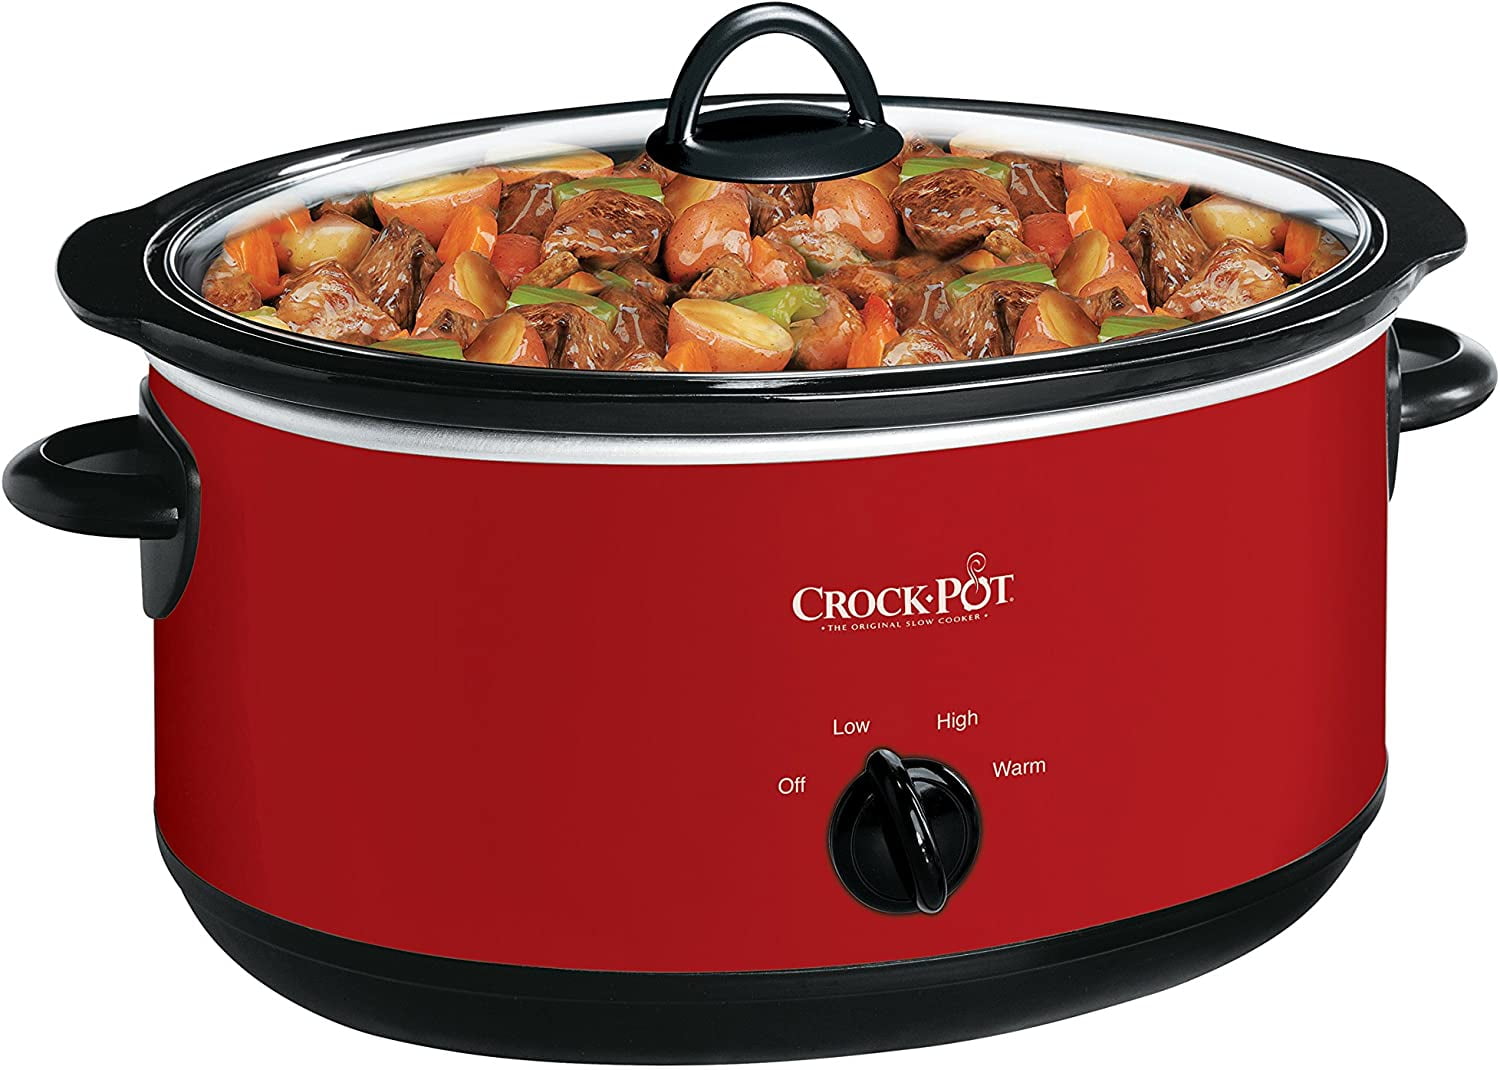 Crock-pot Express Crock Slow Cooker, 8 quart, Red 